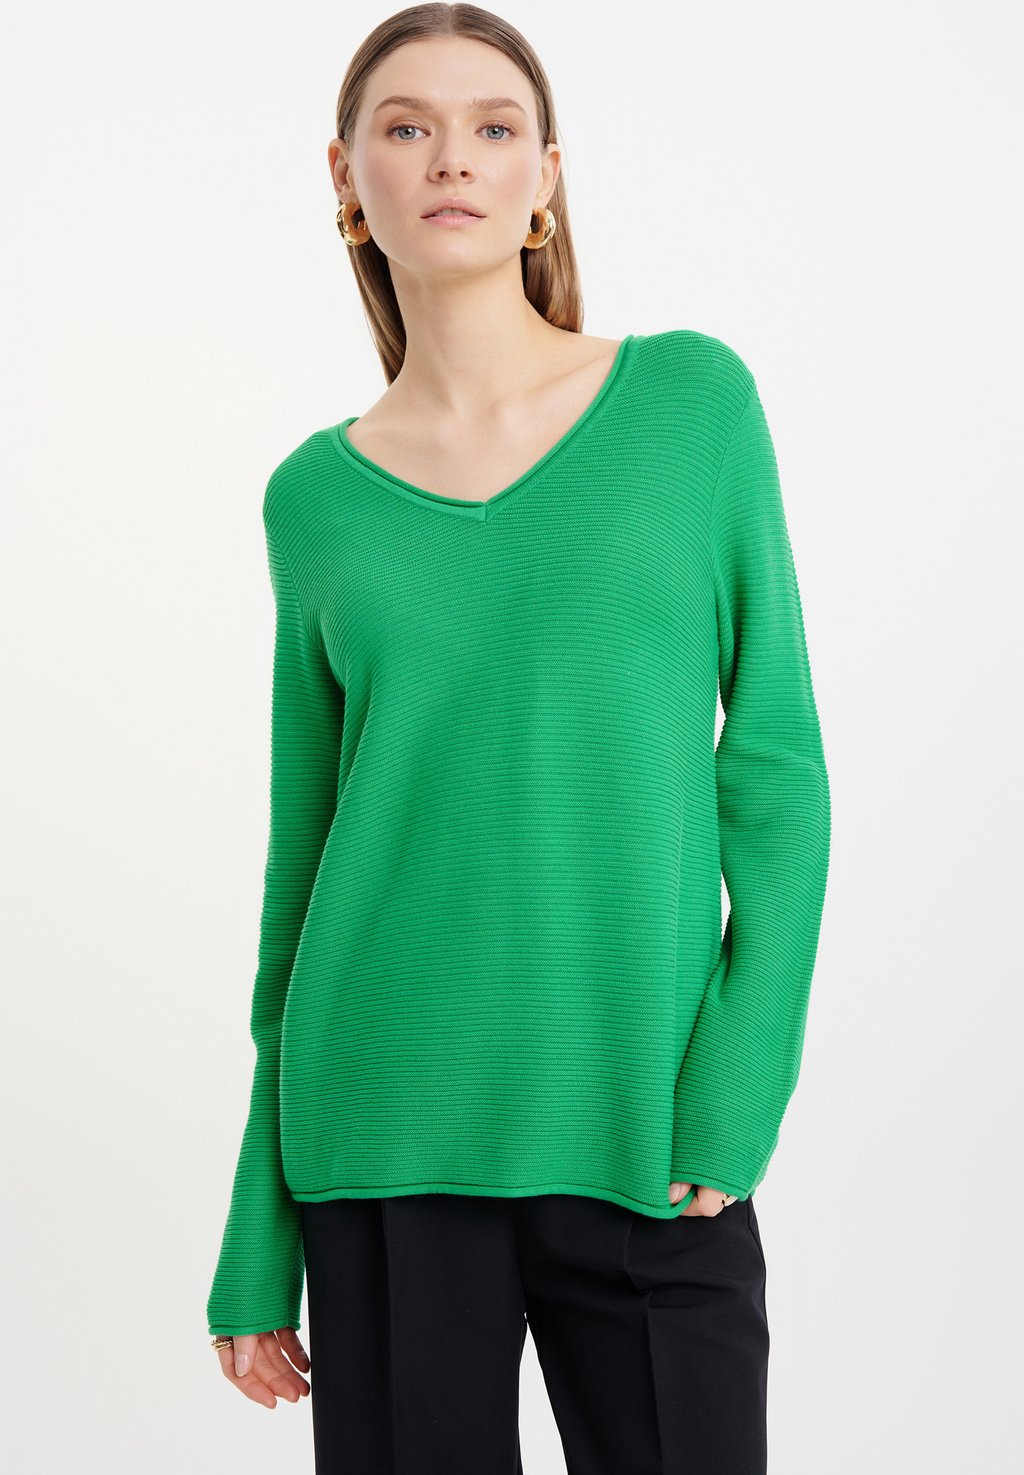 Вязаный свитер Greenpoint, цвет green вязаный свитер ihbrielle ichi цвет oatmeal w green tea